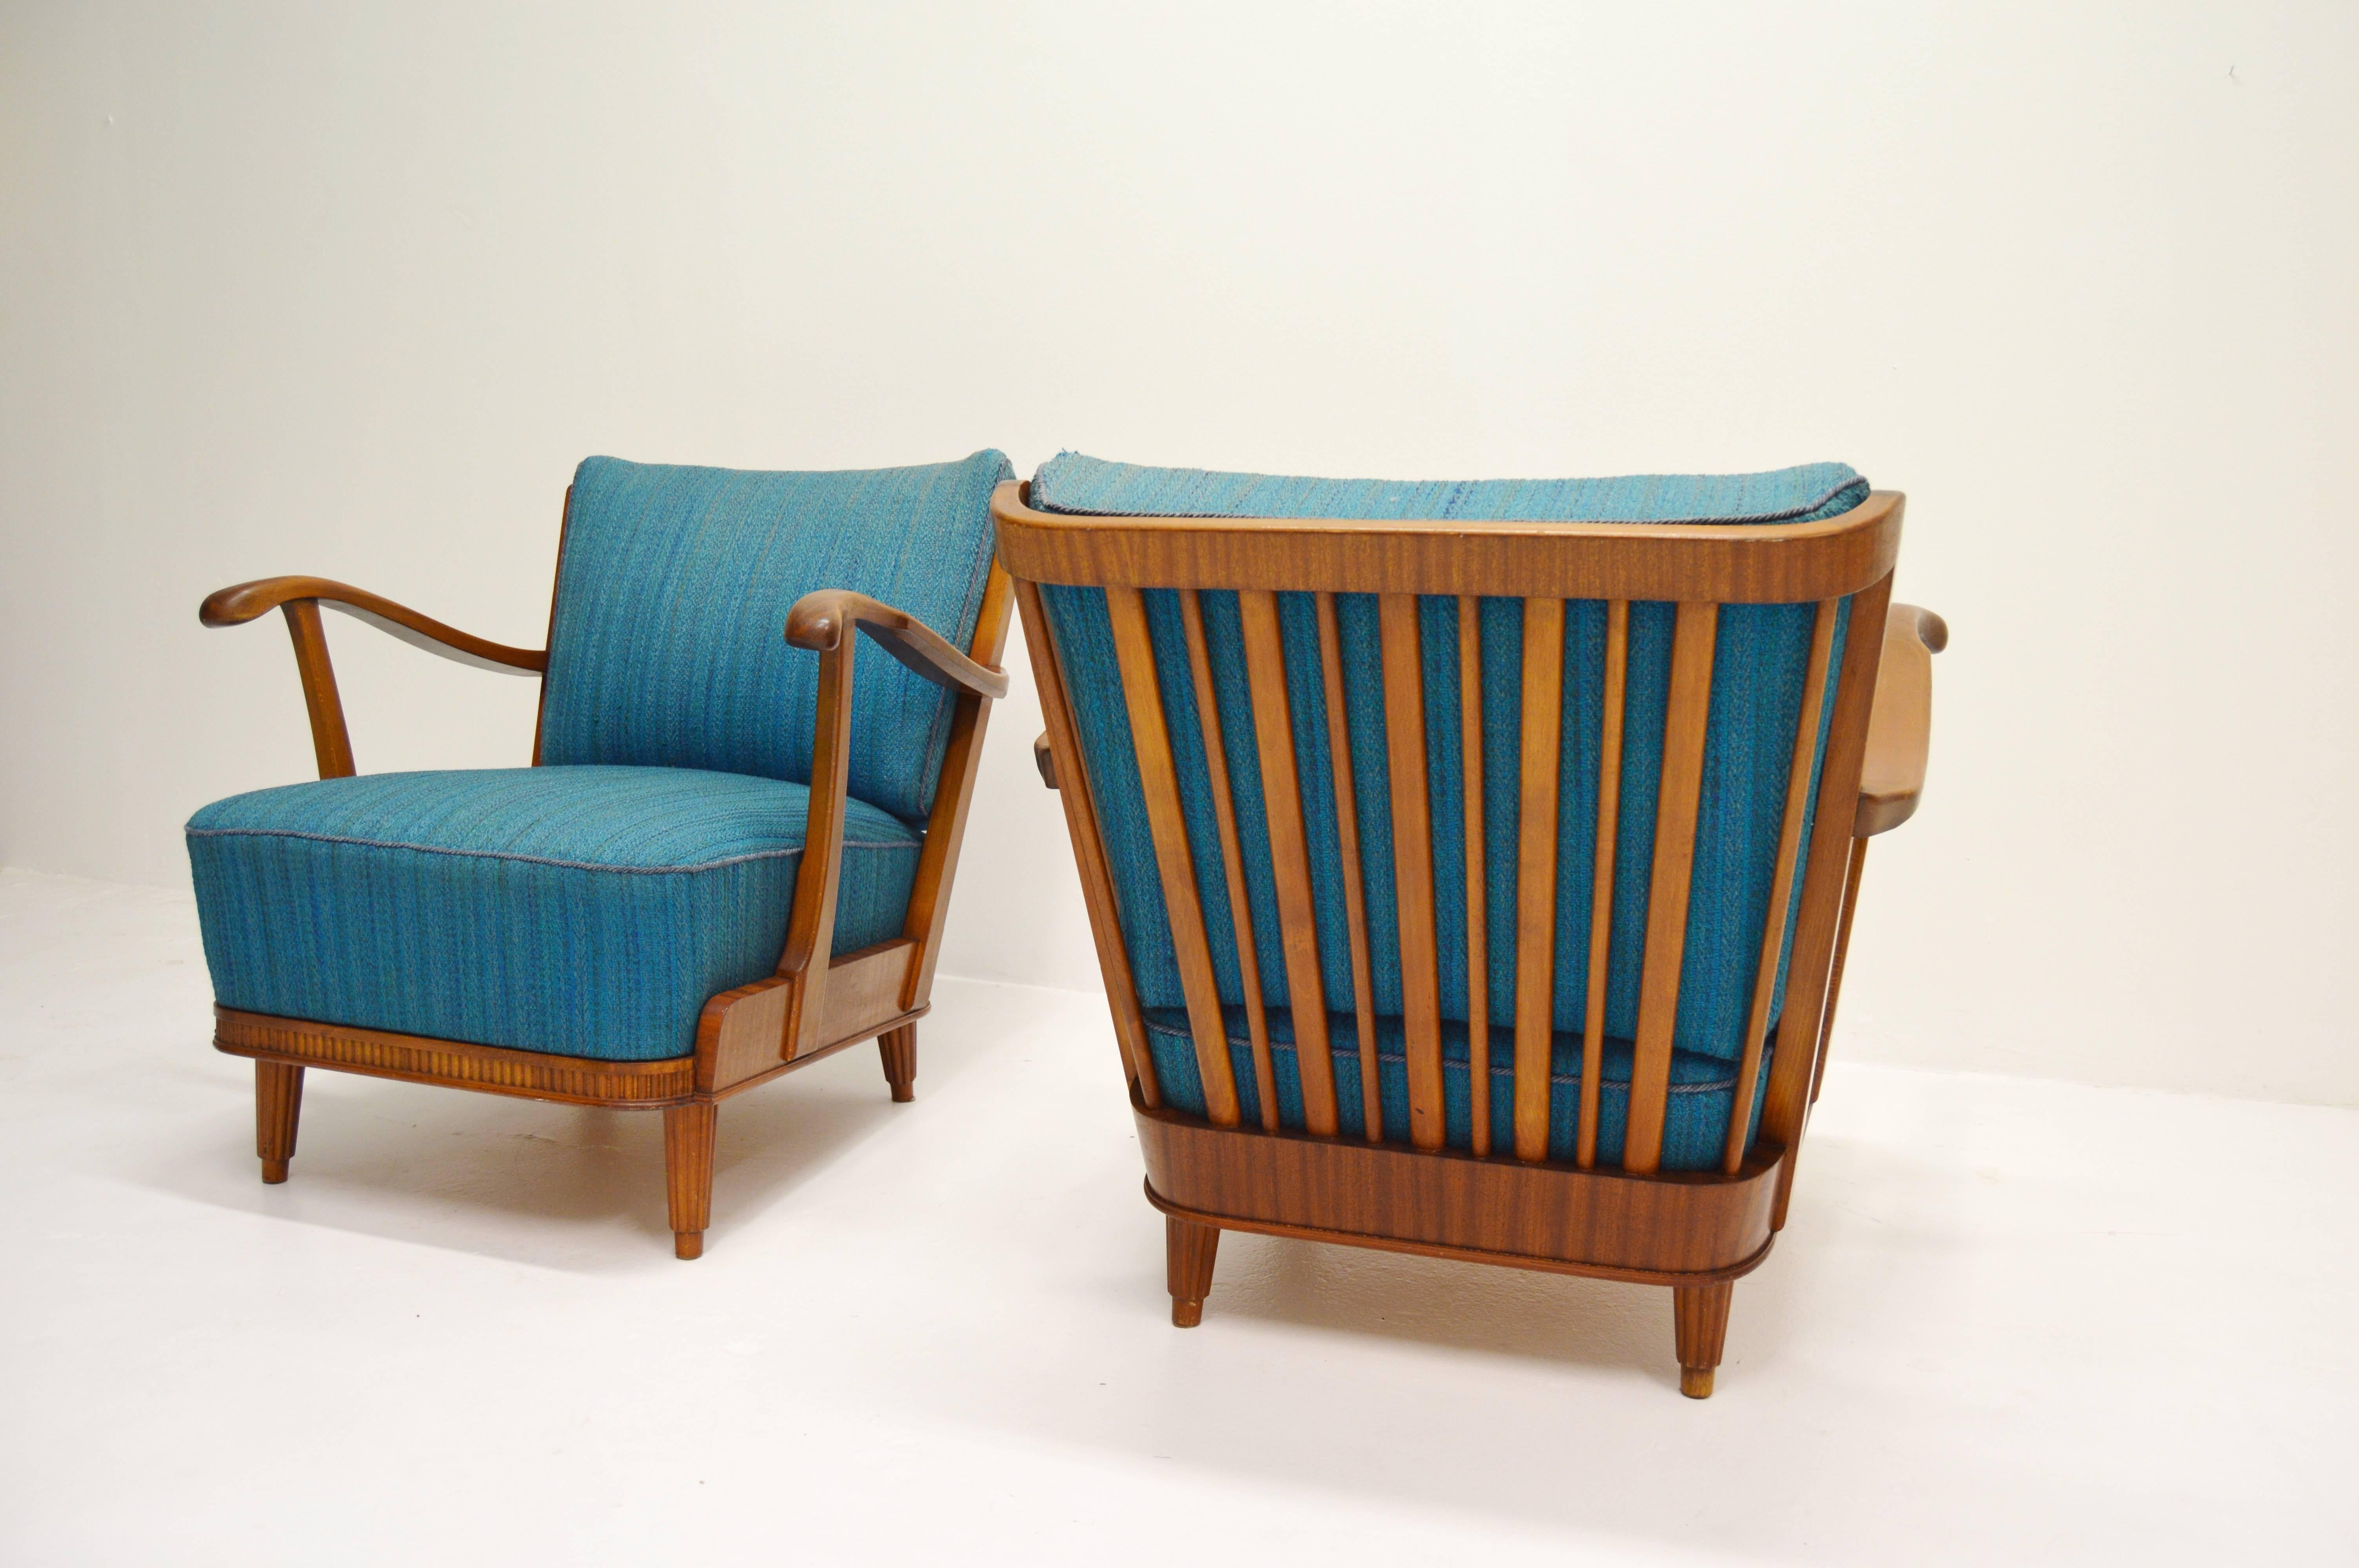 Elegant midcentury lounge chairs designed by Swedish Svante Skogh for Förenade Möbelfabrikerna Linköping in Sweden.
Mahogany and elmwood.